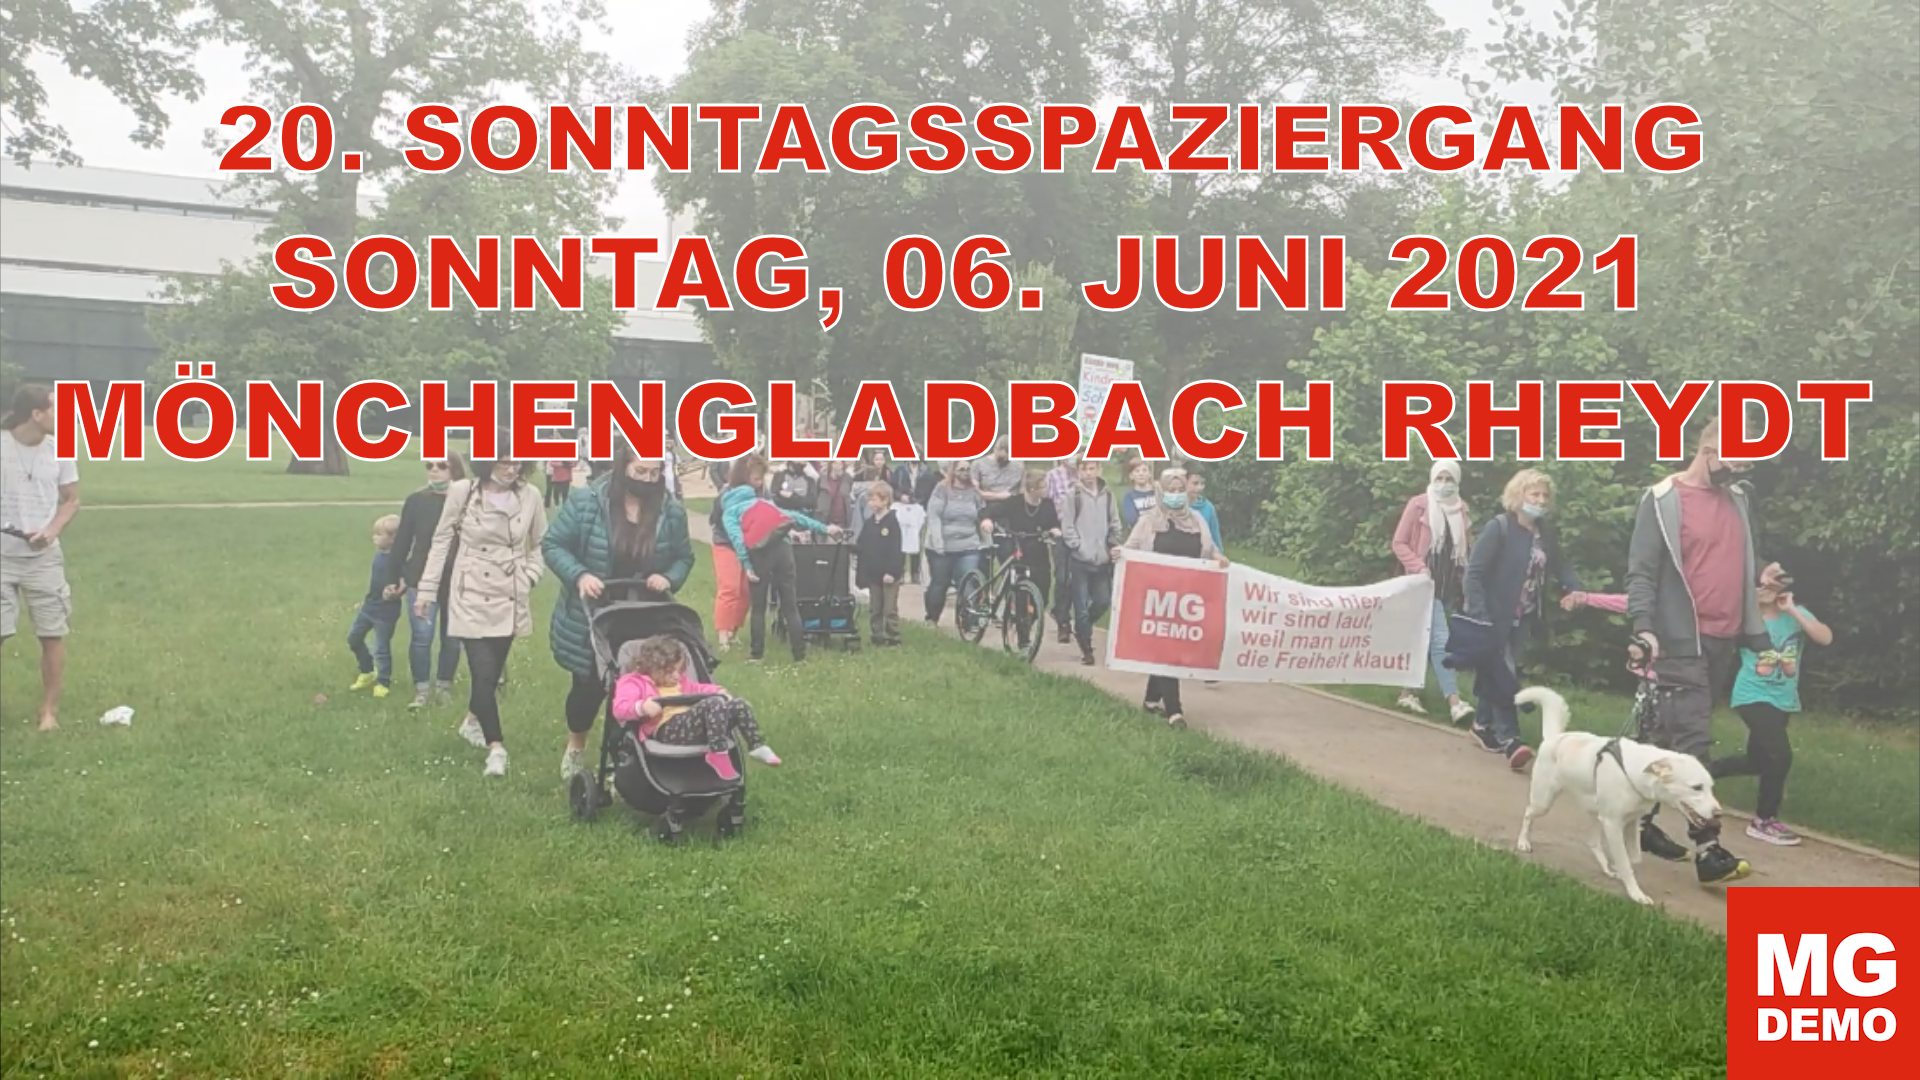 20. MG DEMO Sonntagsspaziergang am 06.06.2021 in Mönchengladbach-Rheydt